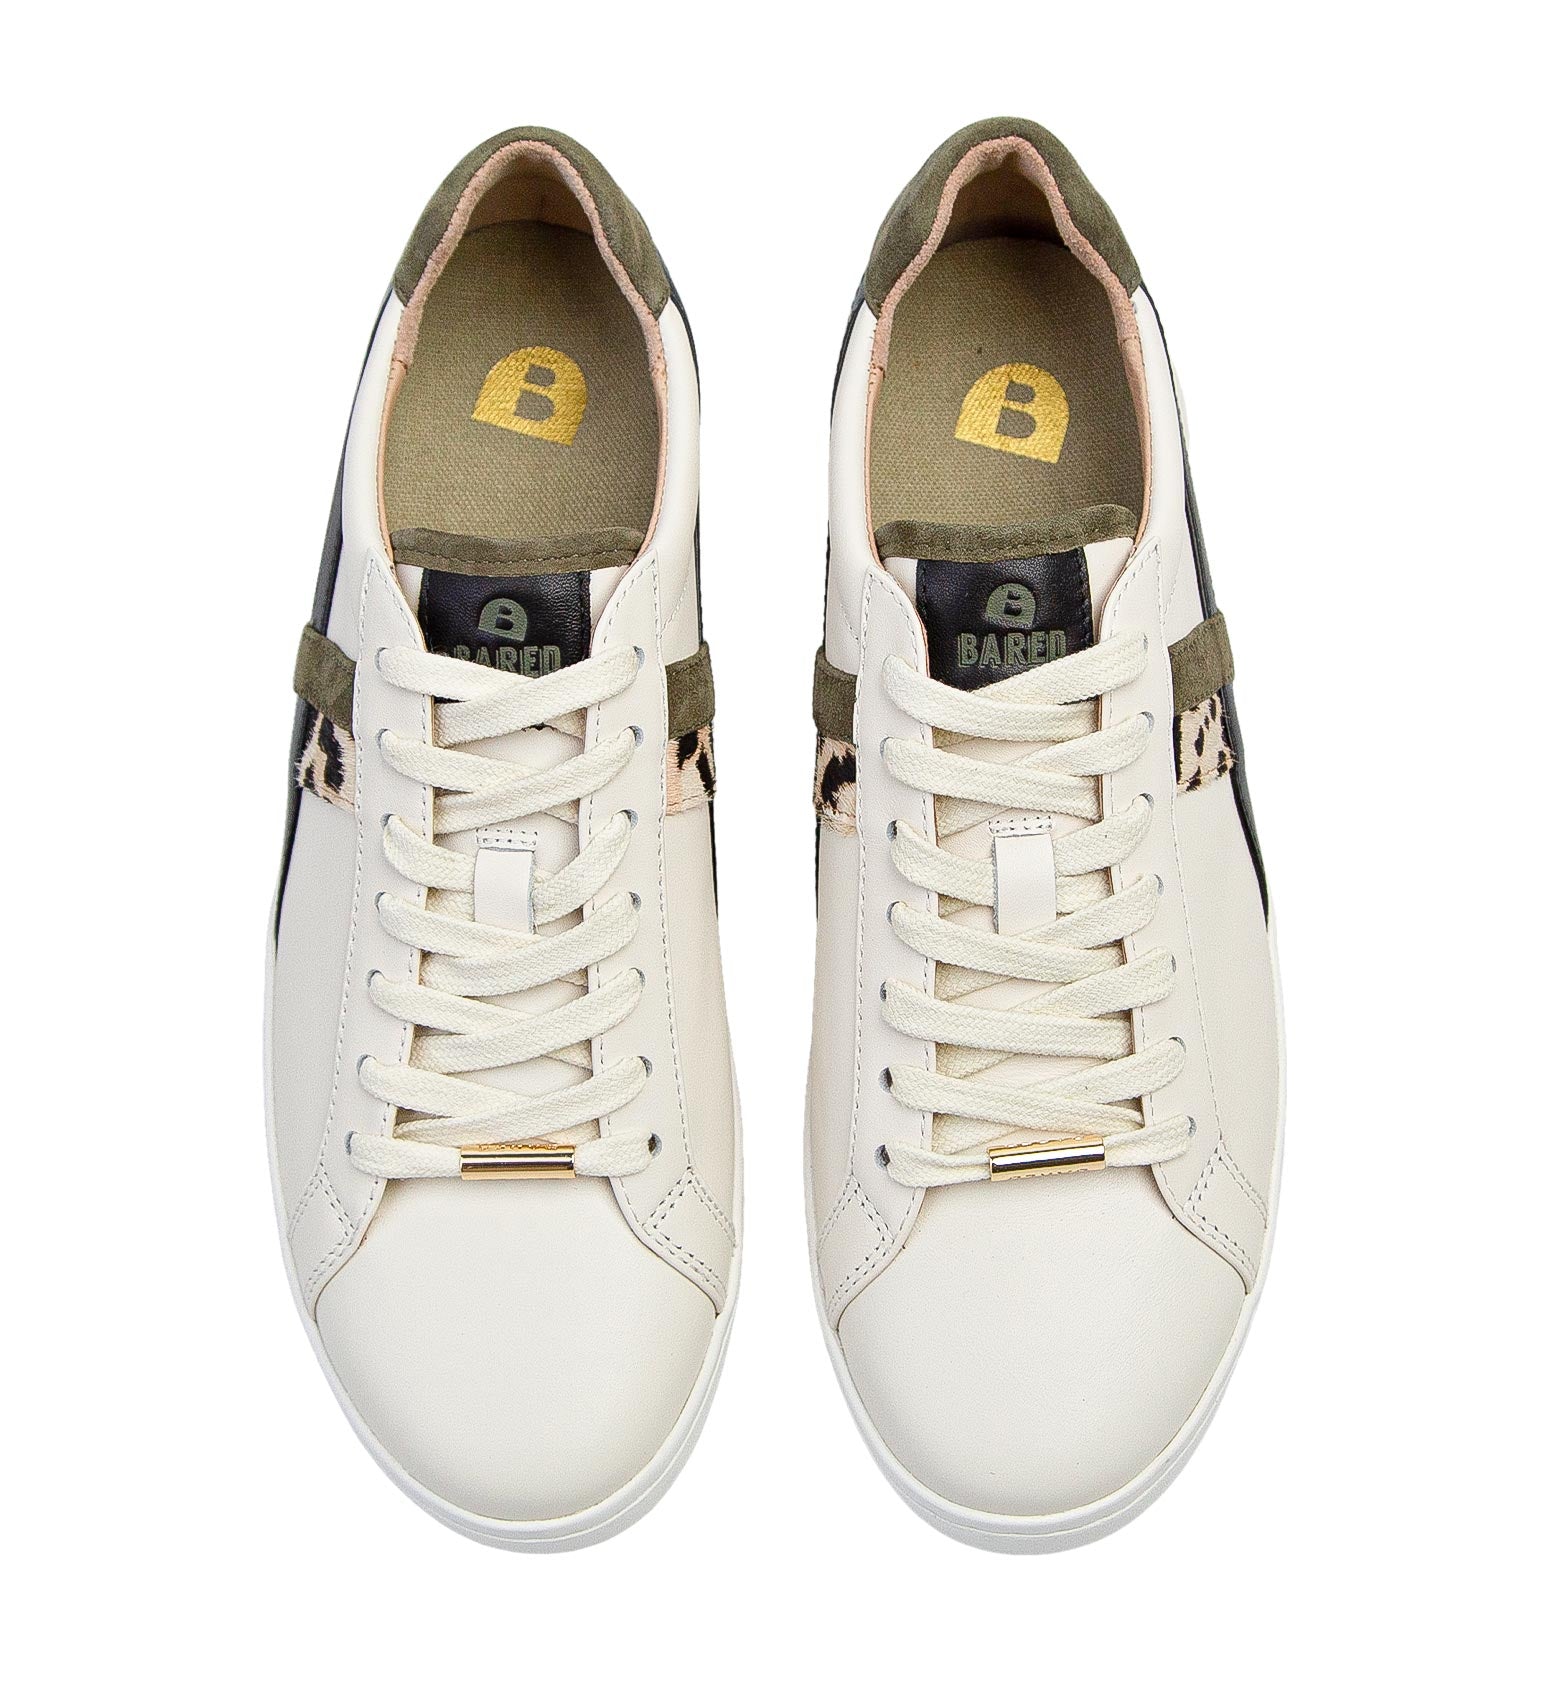 Seriema Ecru & Khaki Leather Sneakers | Bared Footwear